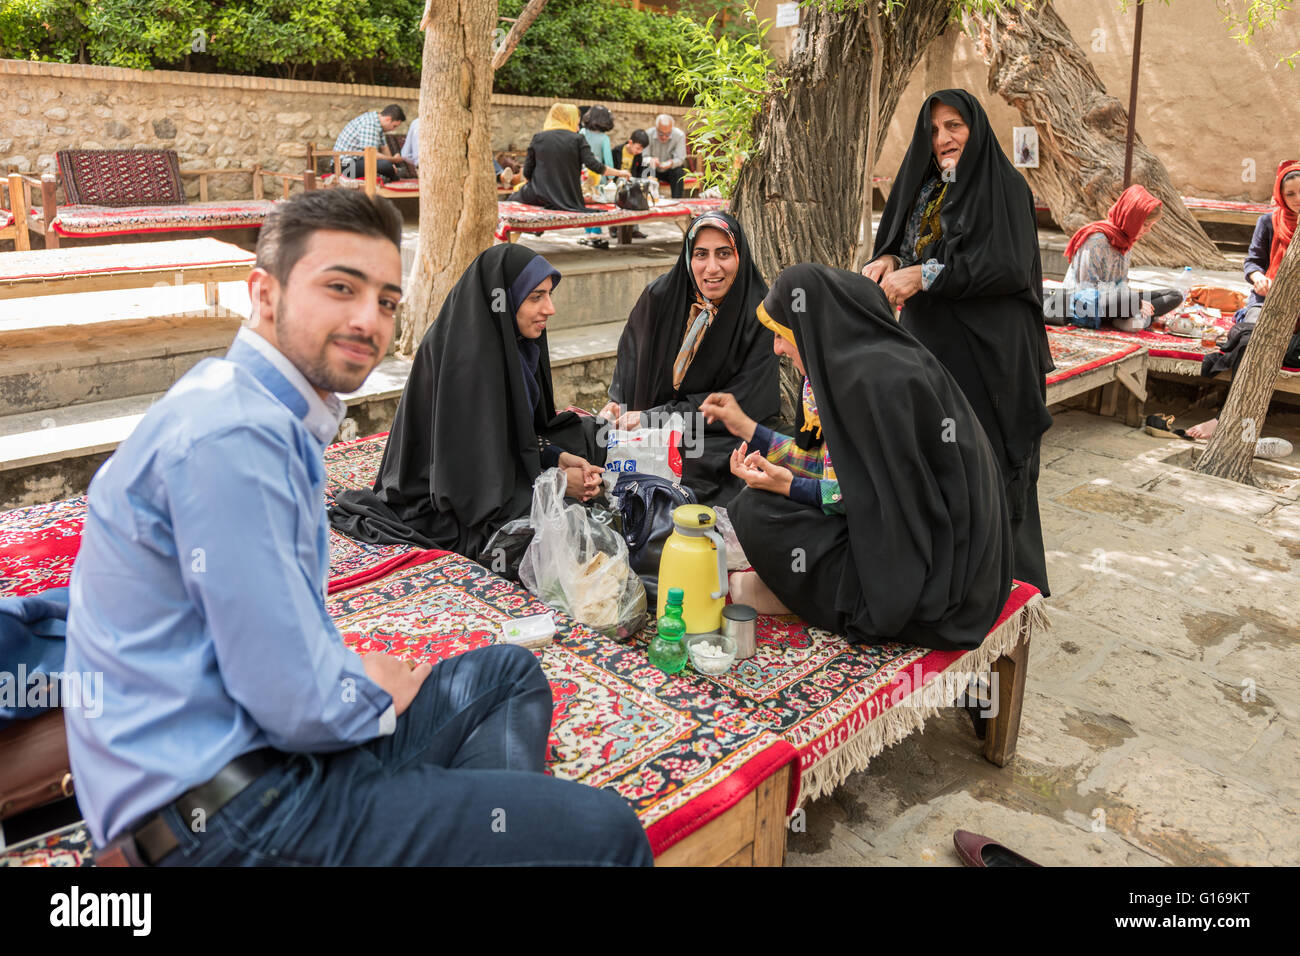 Family picnic in Fin Garden tea house with women wearing chadors. Stock Photo